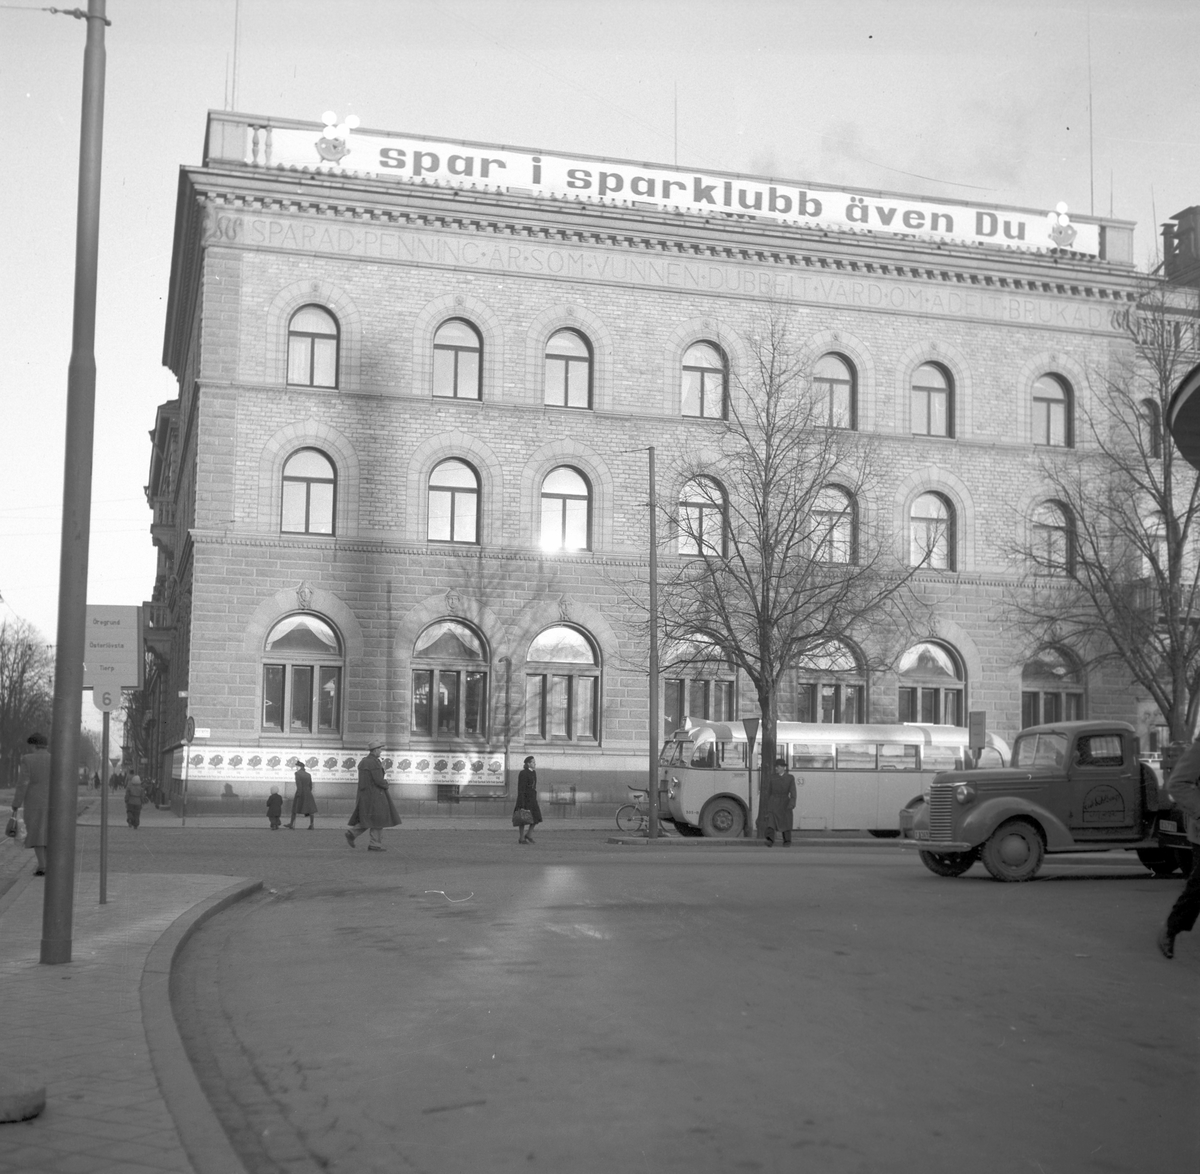 Gävle Stads Sparbank. Reklam "Spar i Sparklubb även Du". Vy från busstorget. Den 28 oktober 1948